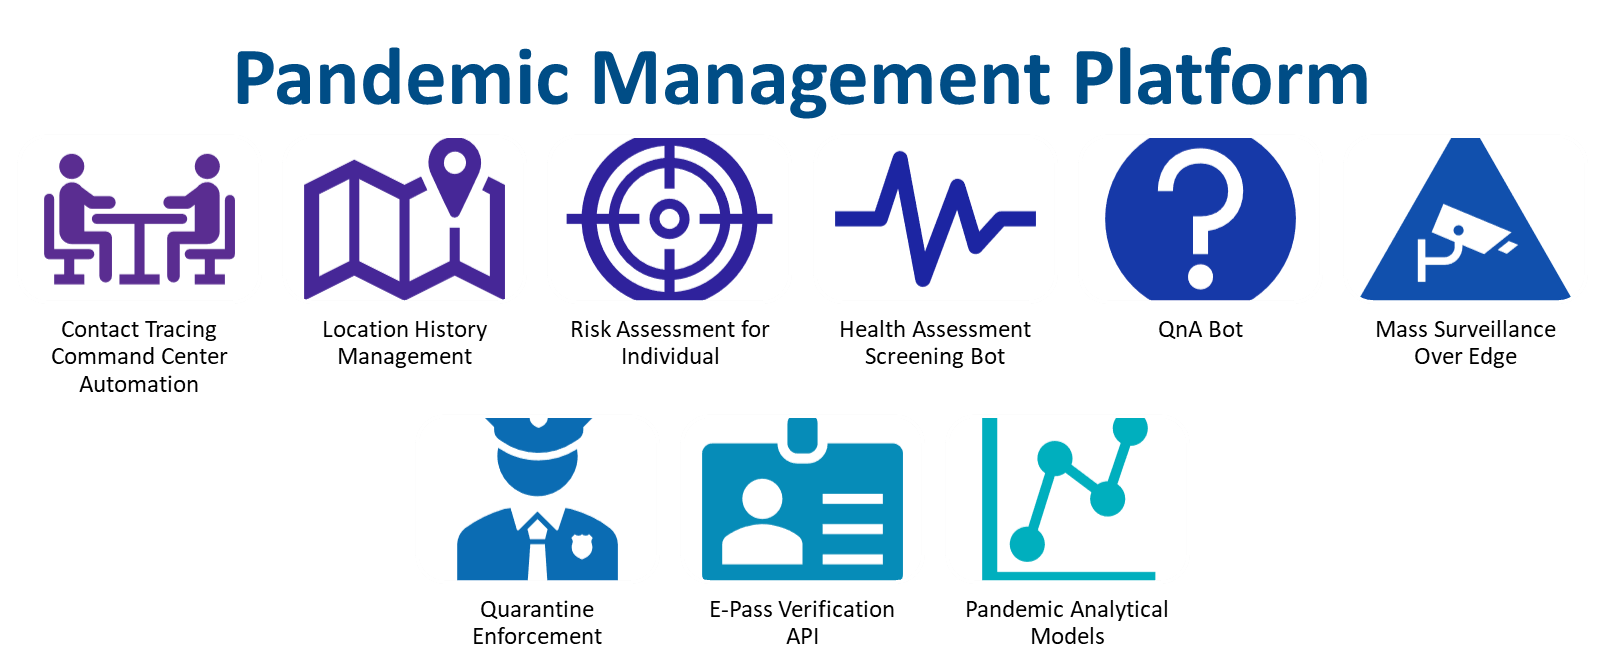 Pandemic Management Platform